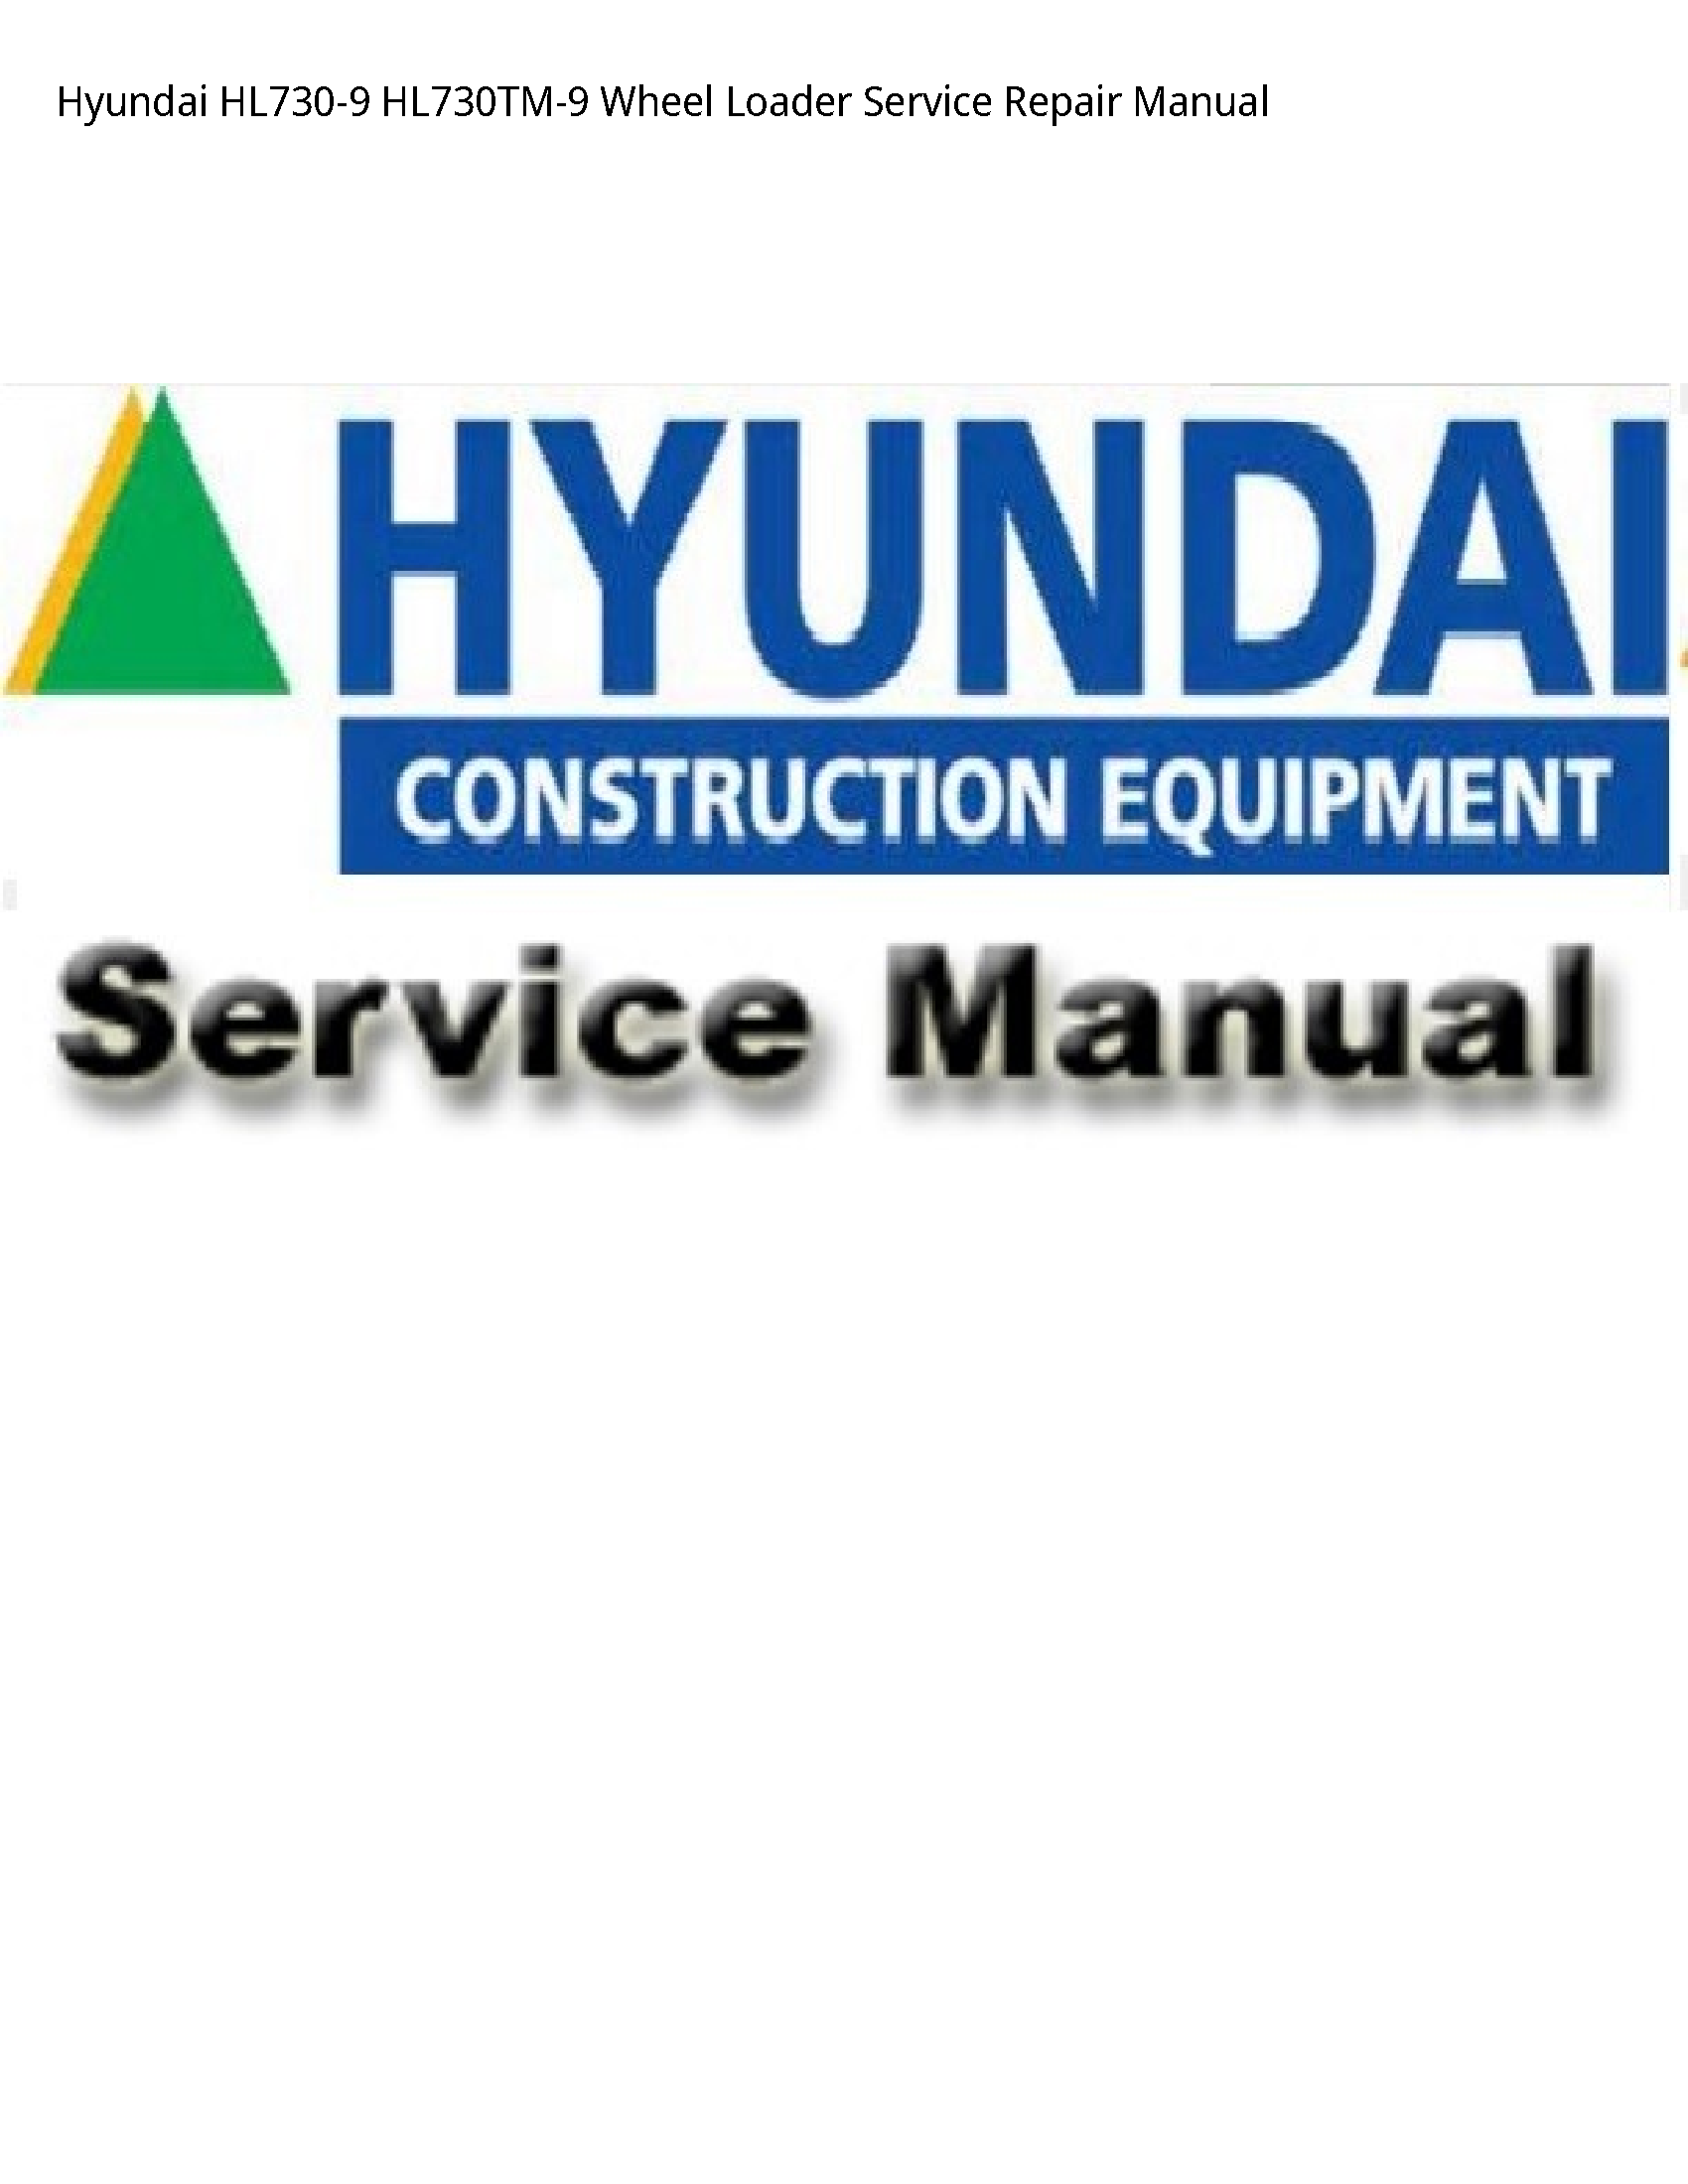 Hyundai HL730-9 Wheel Loader manual